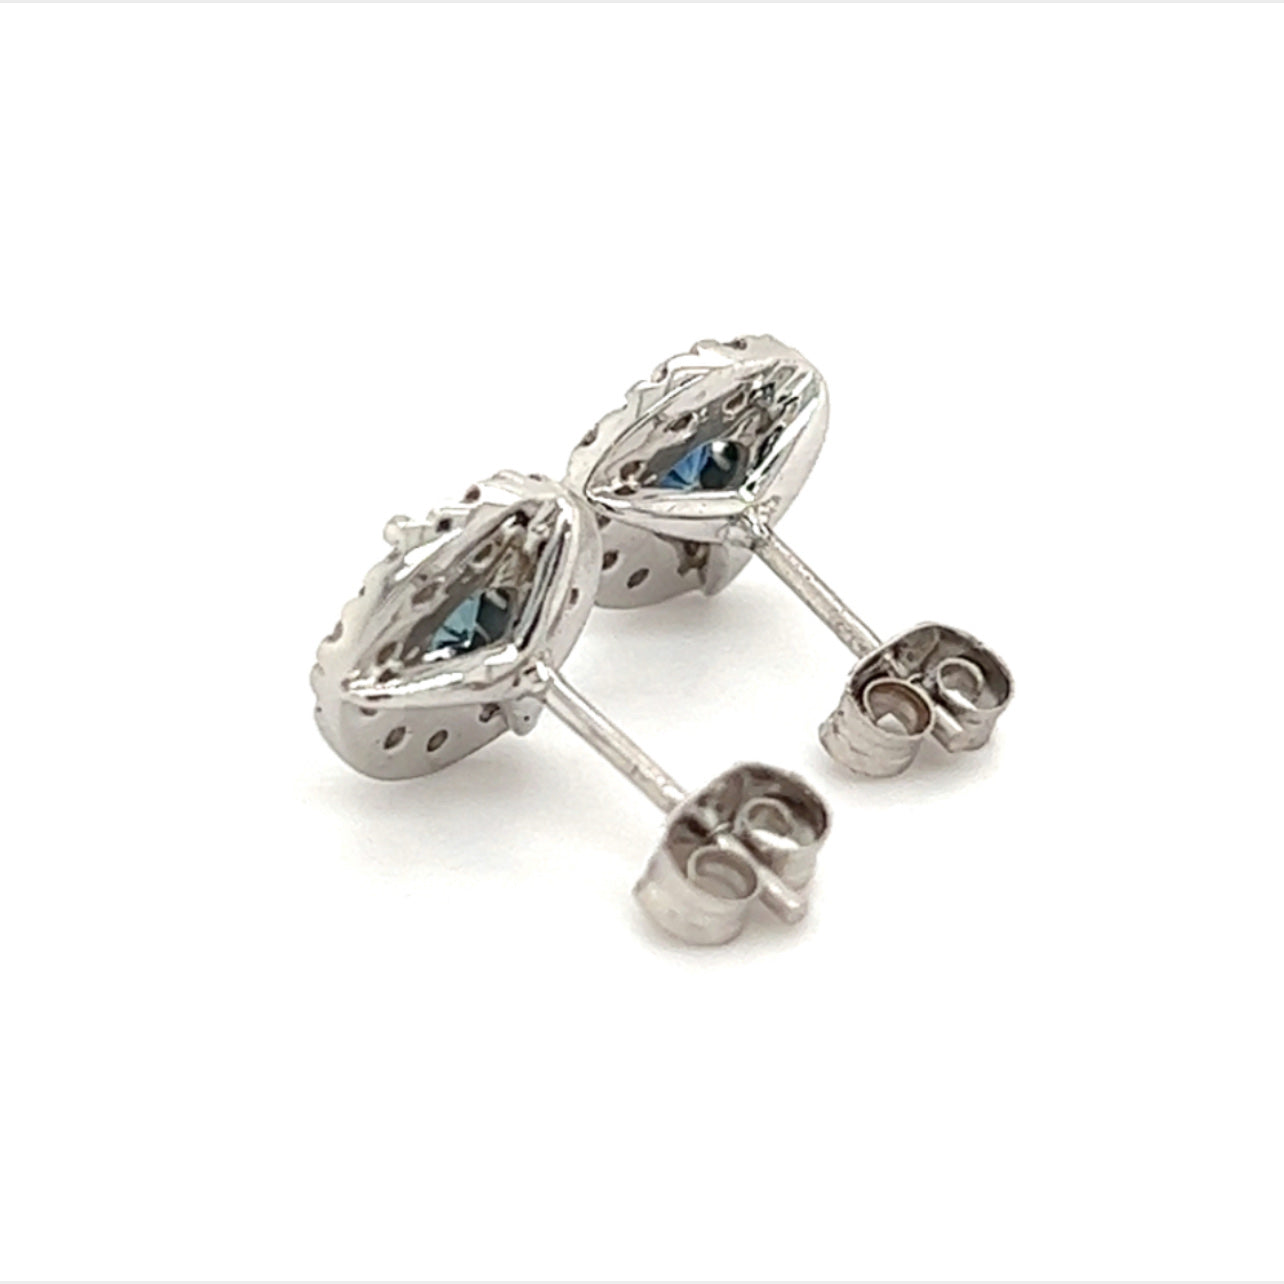 Natural Sapphire Diamond Stud Earrings 14k Gold 1.09 TCW Certified $3,950 216098